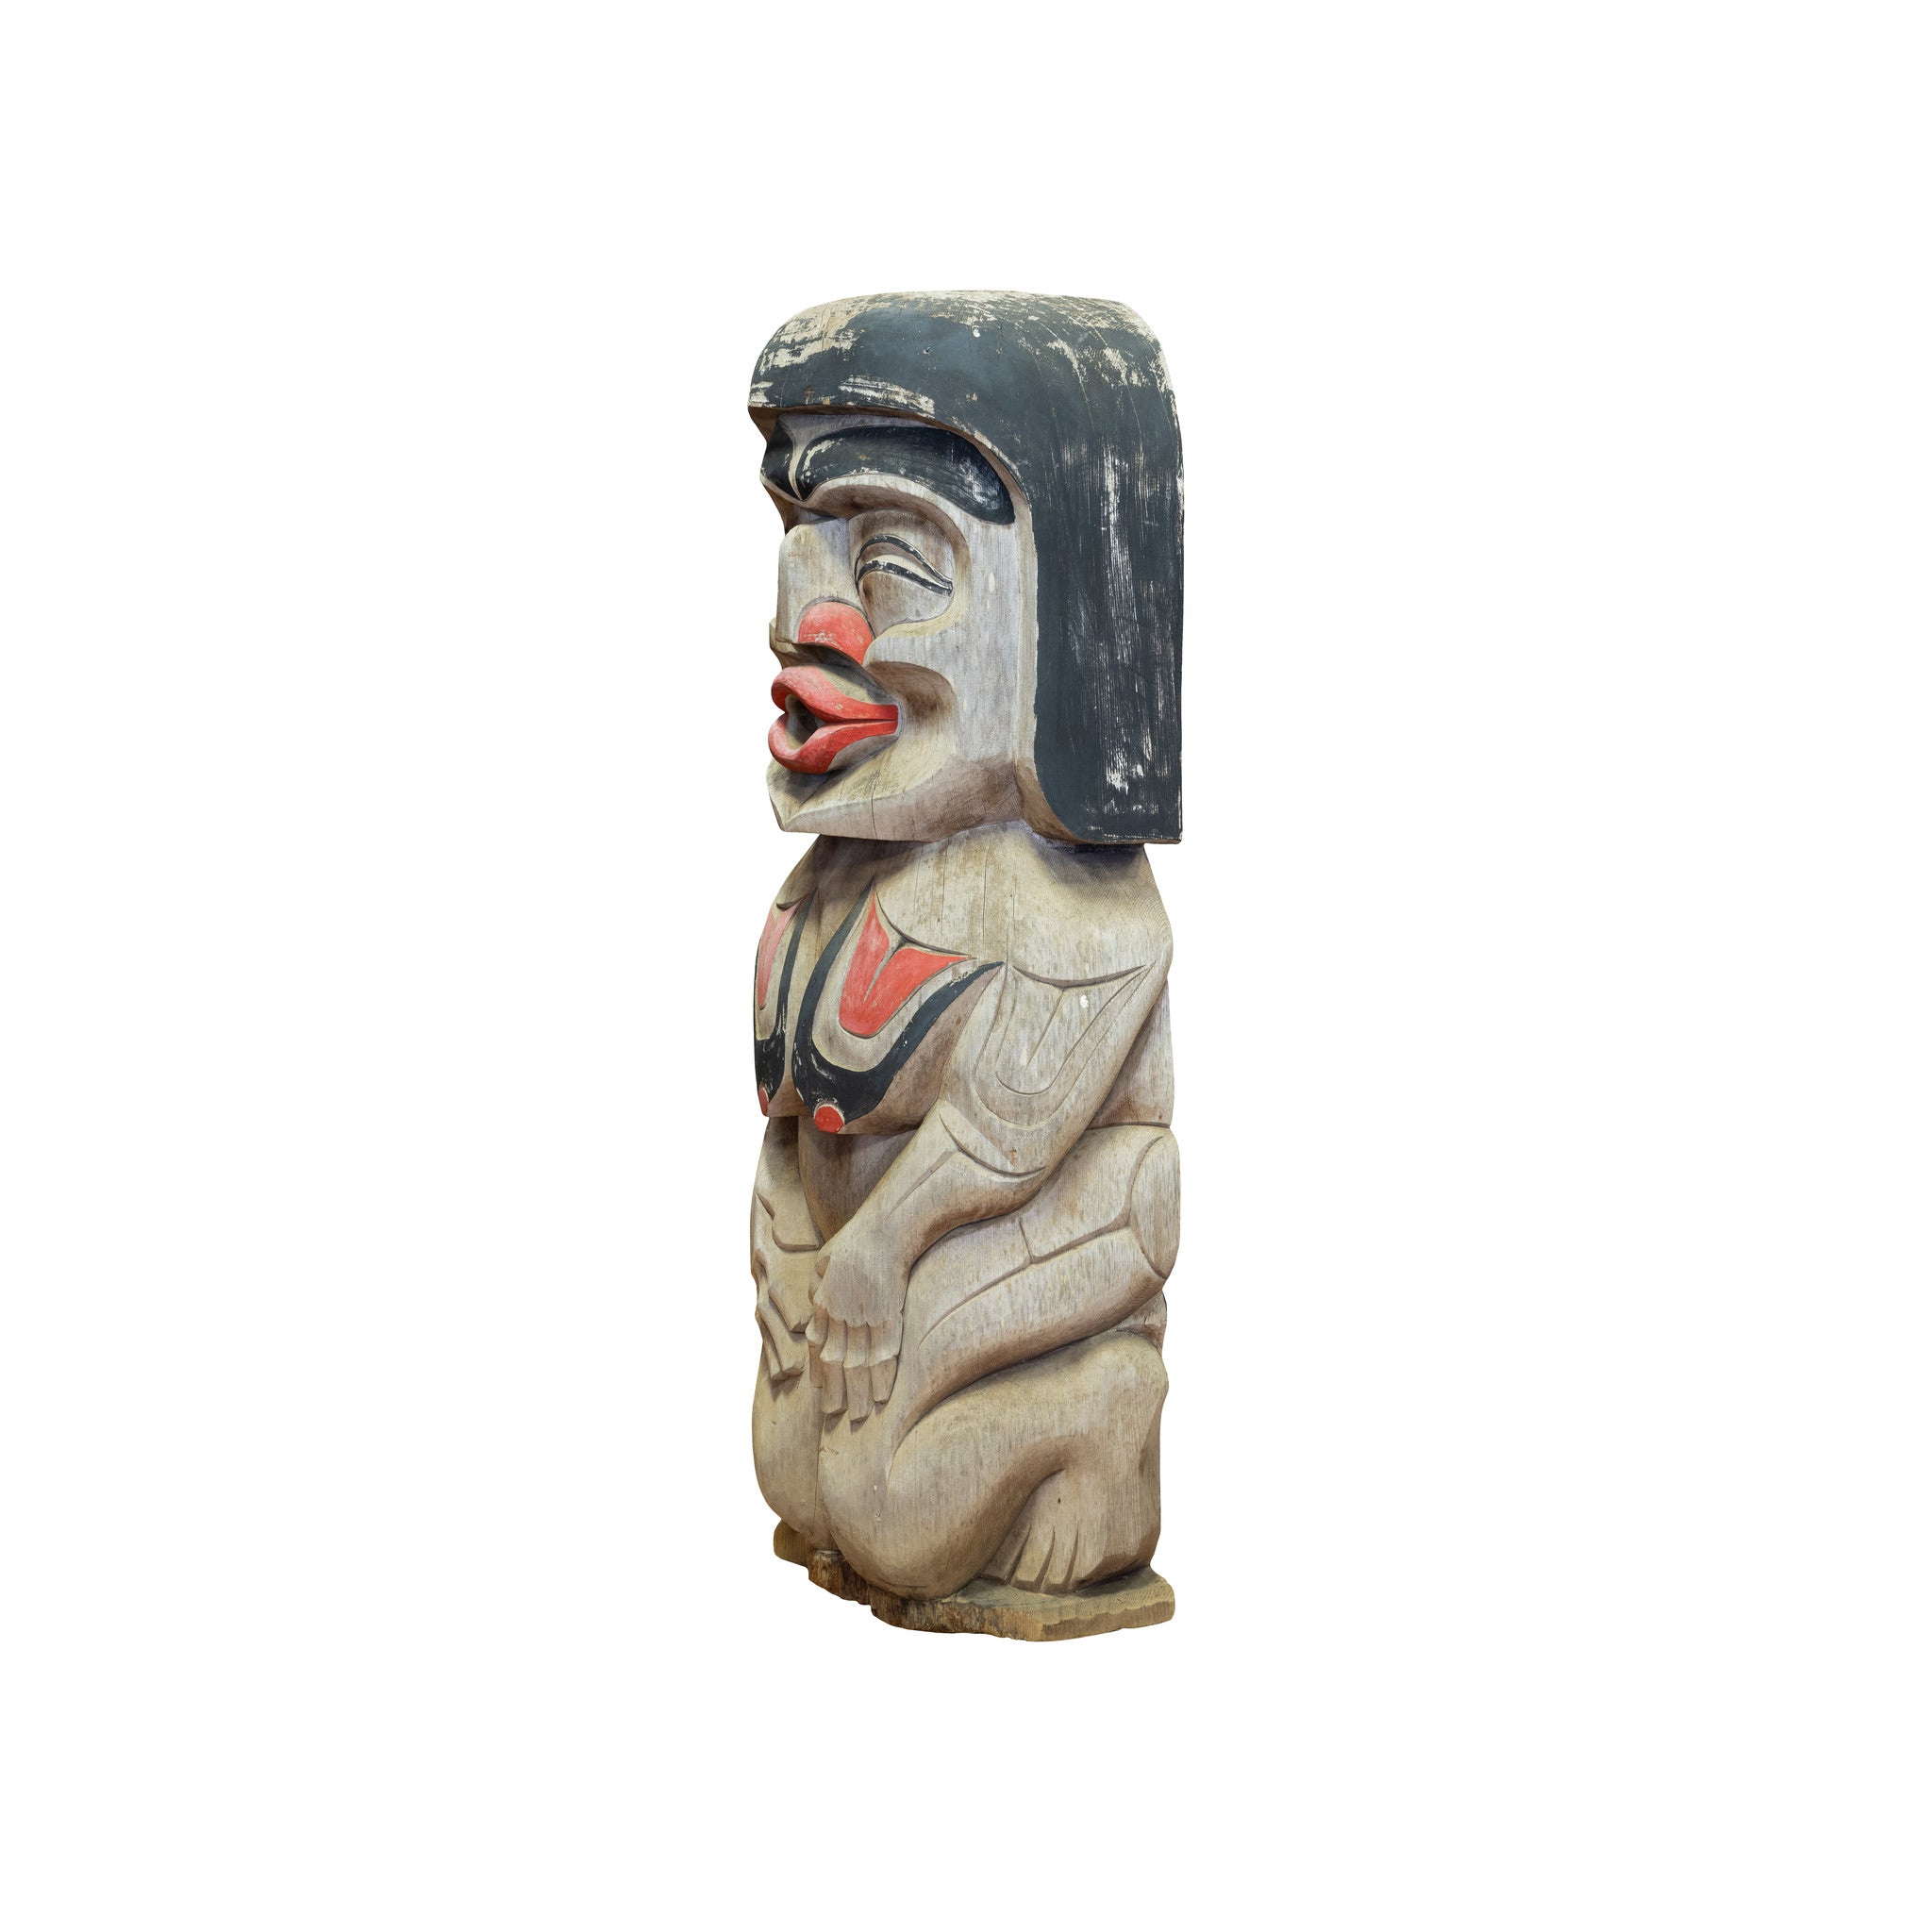 Tsonoqua/Dzunkukwa "Wild Woman of the Woods" Totem